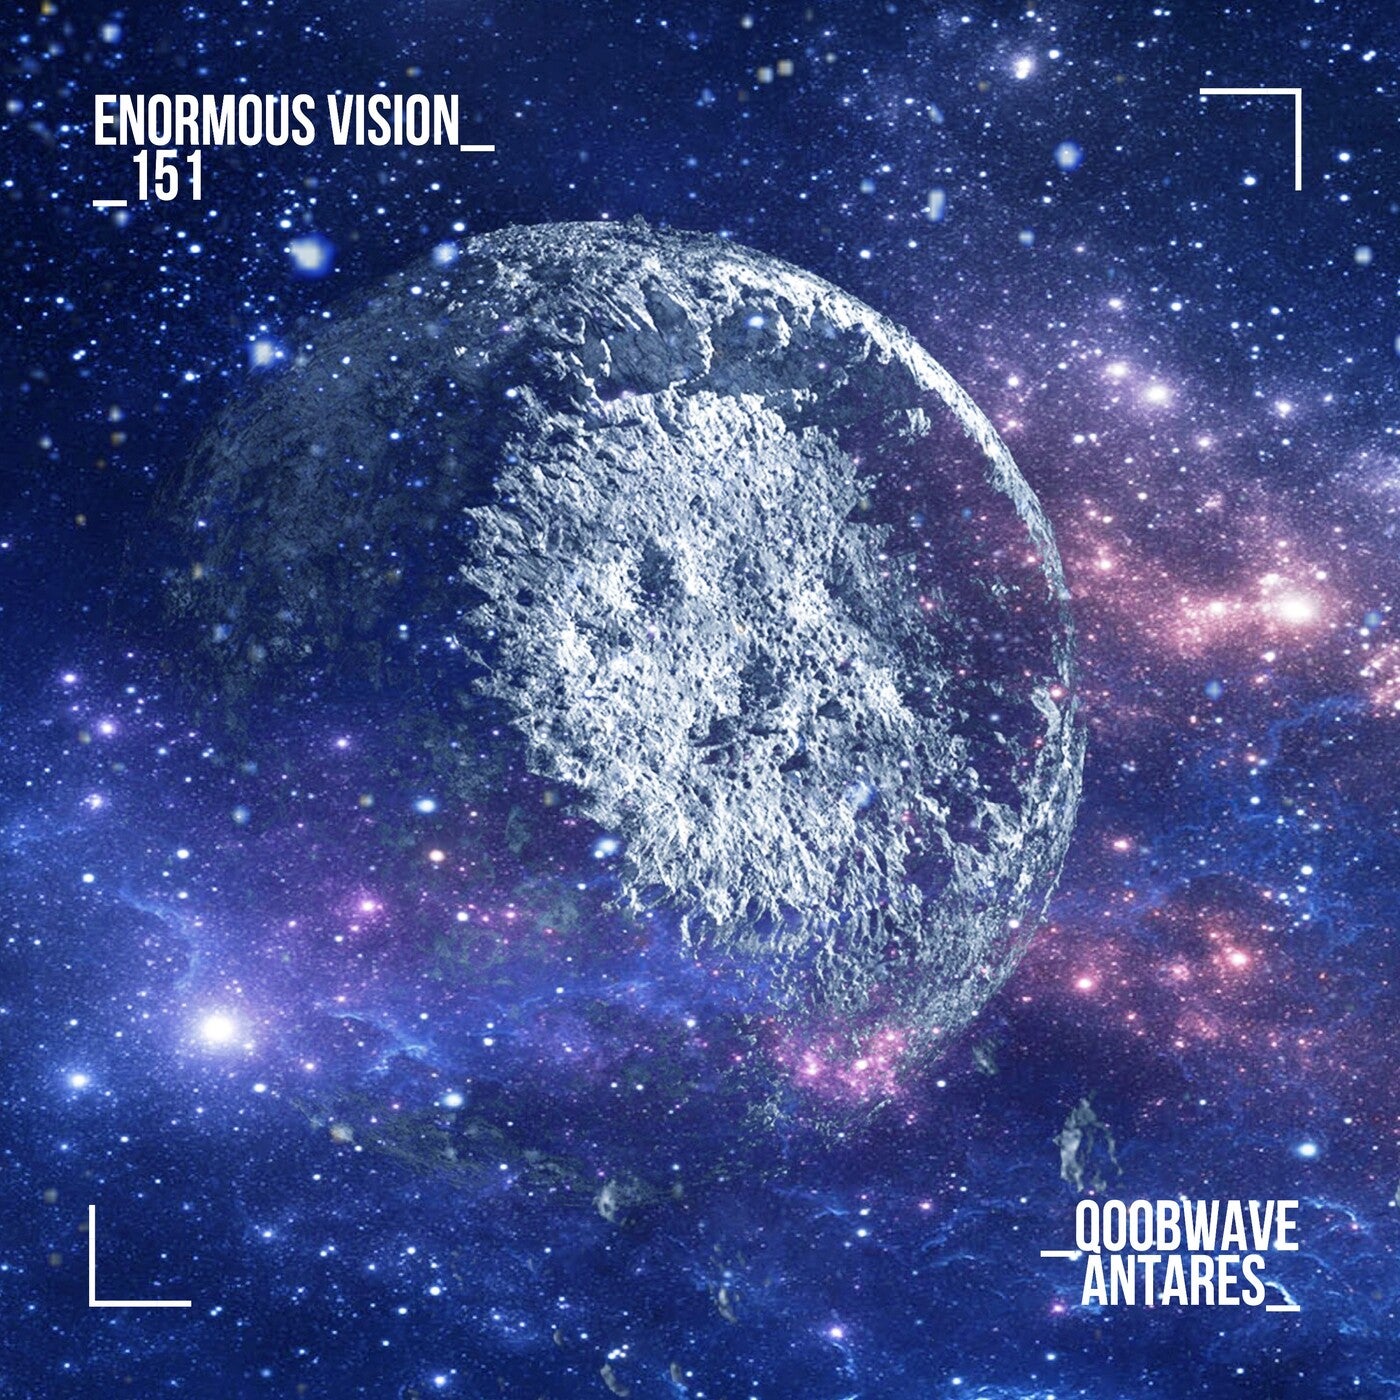 Qoobwave – Antares [ENV151]